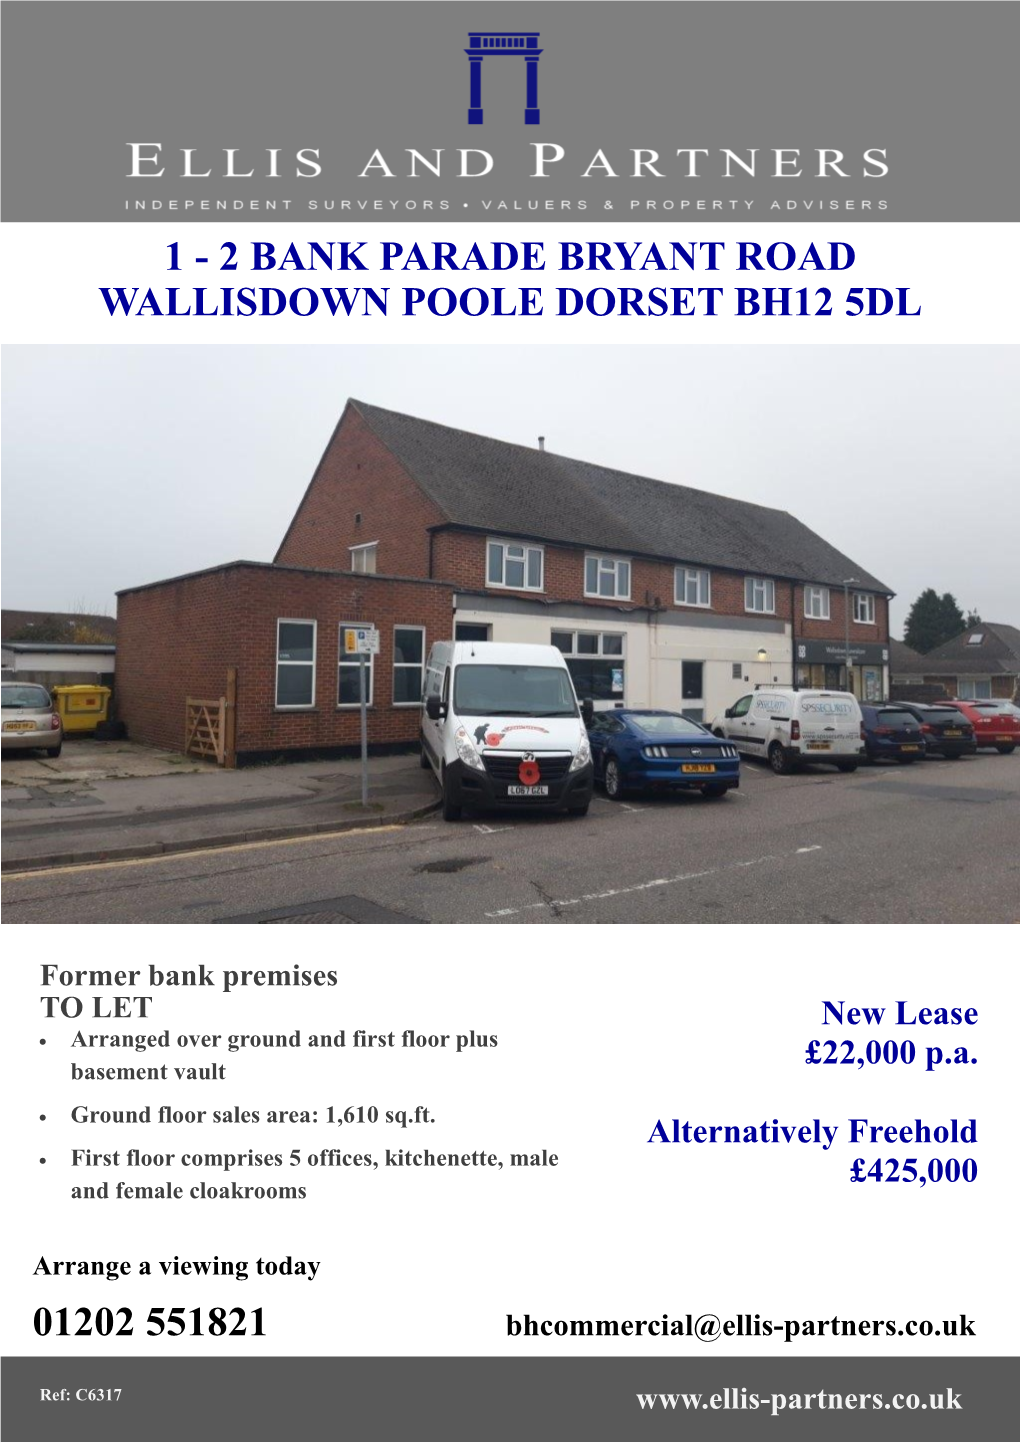 2 Bank Parade Bryant Road Wallisdown Poole Dorset Bh12 5Dl